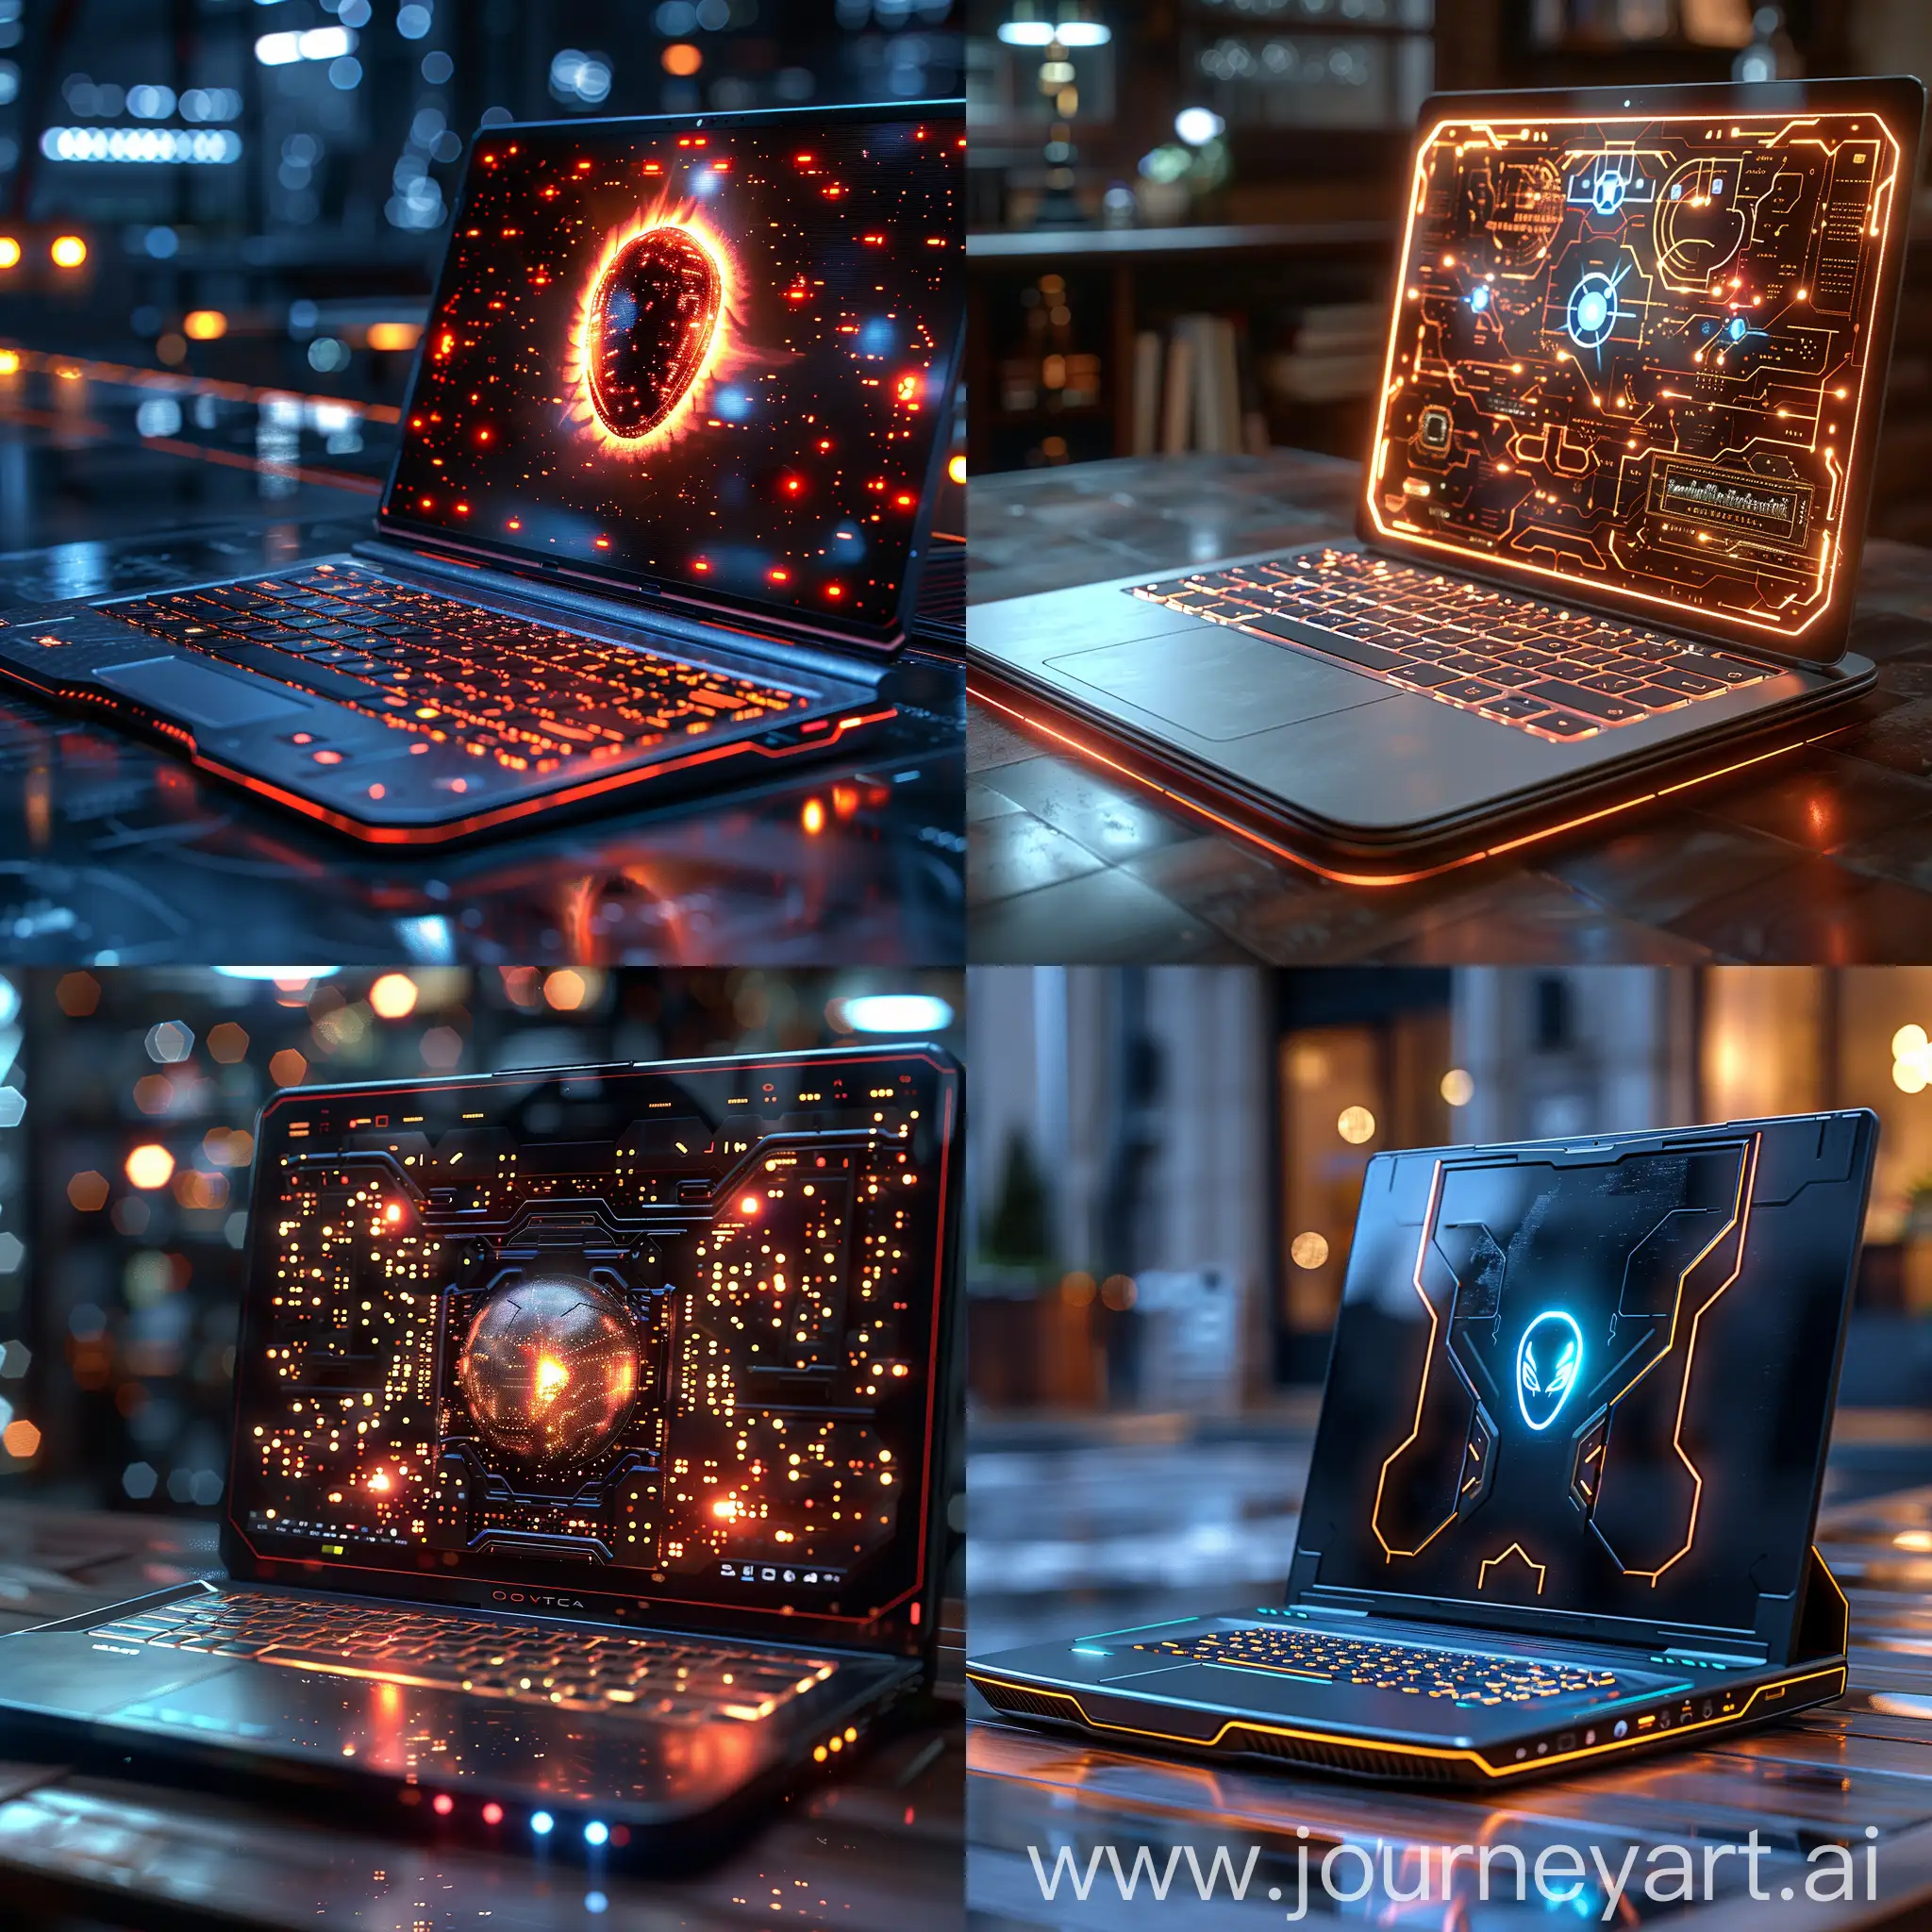 Futuristic-HighTech-Laptop-with-Octane-Render-Stylization